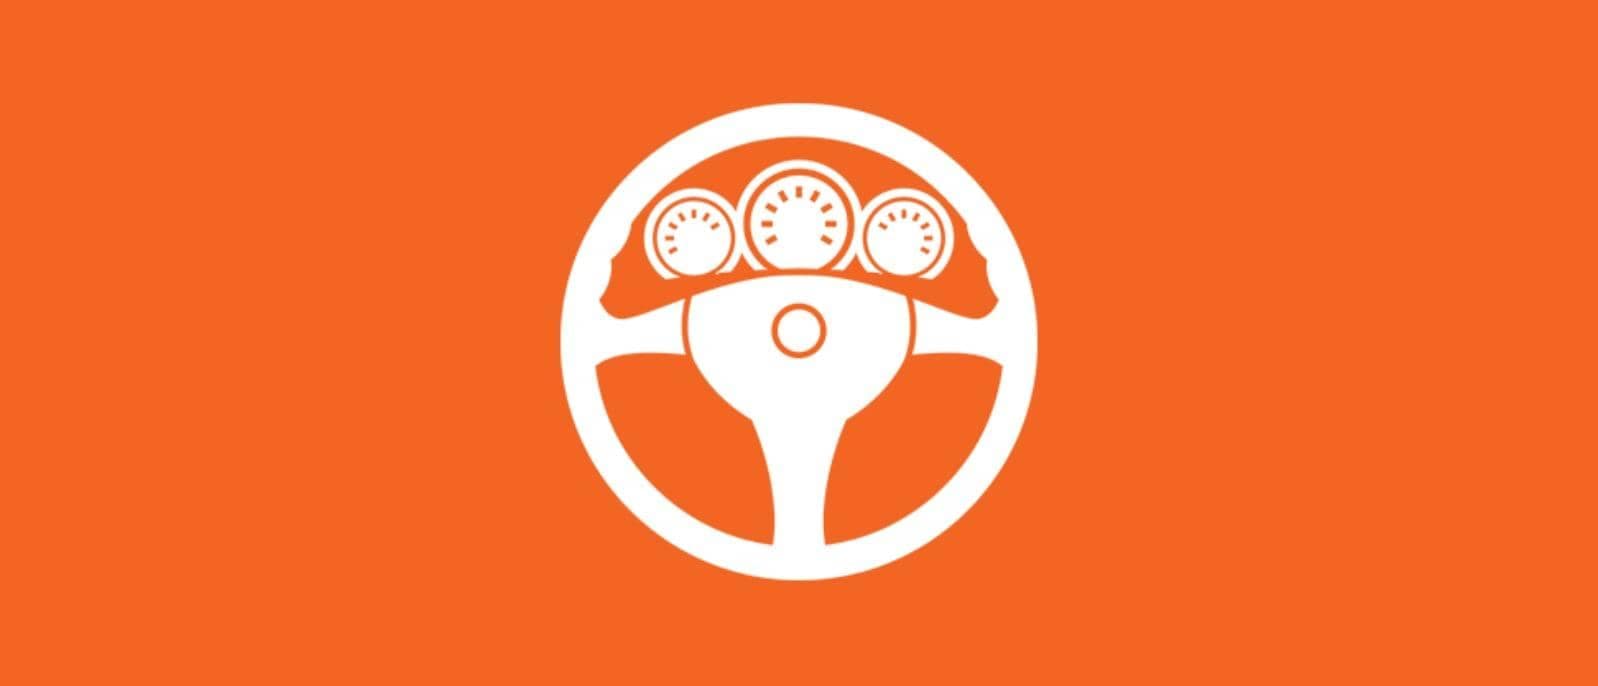 steering wheel icon